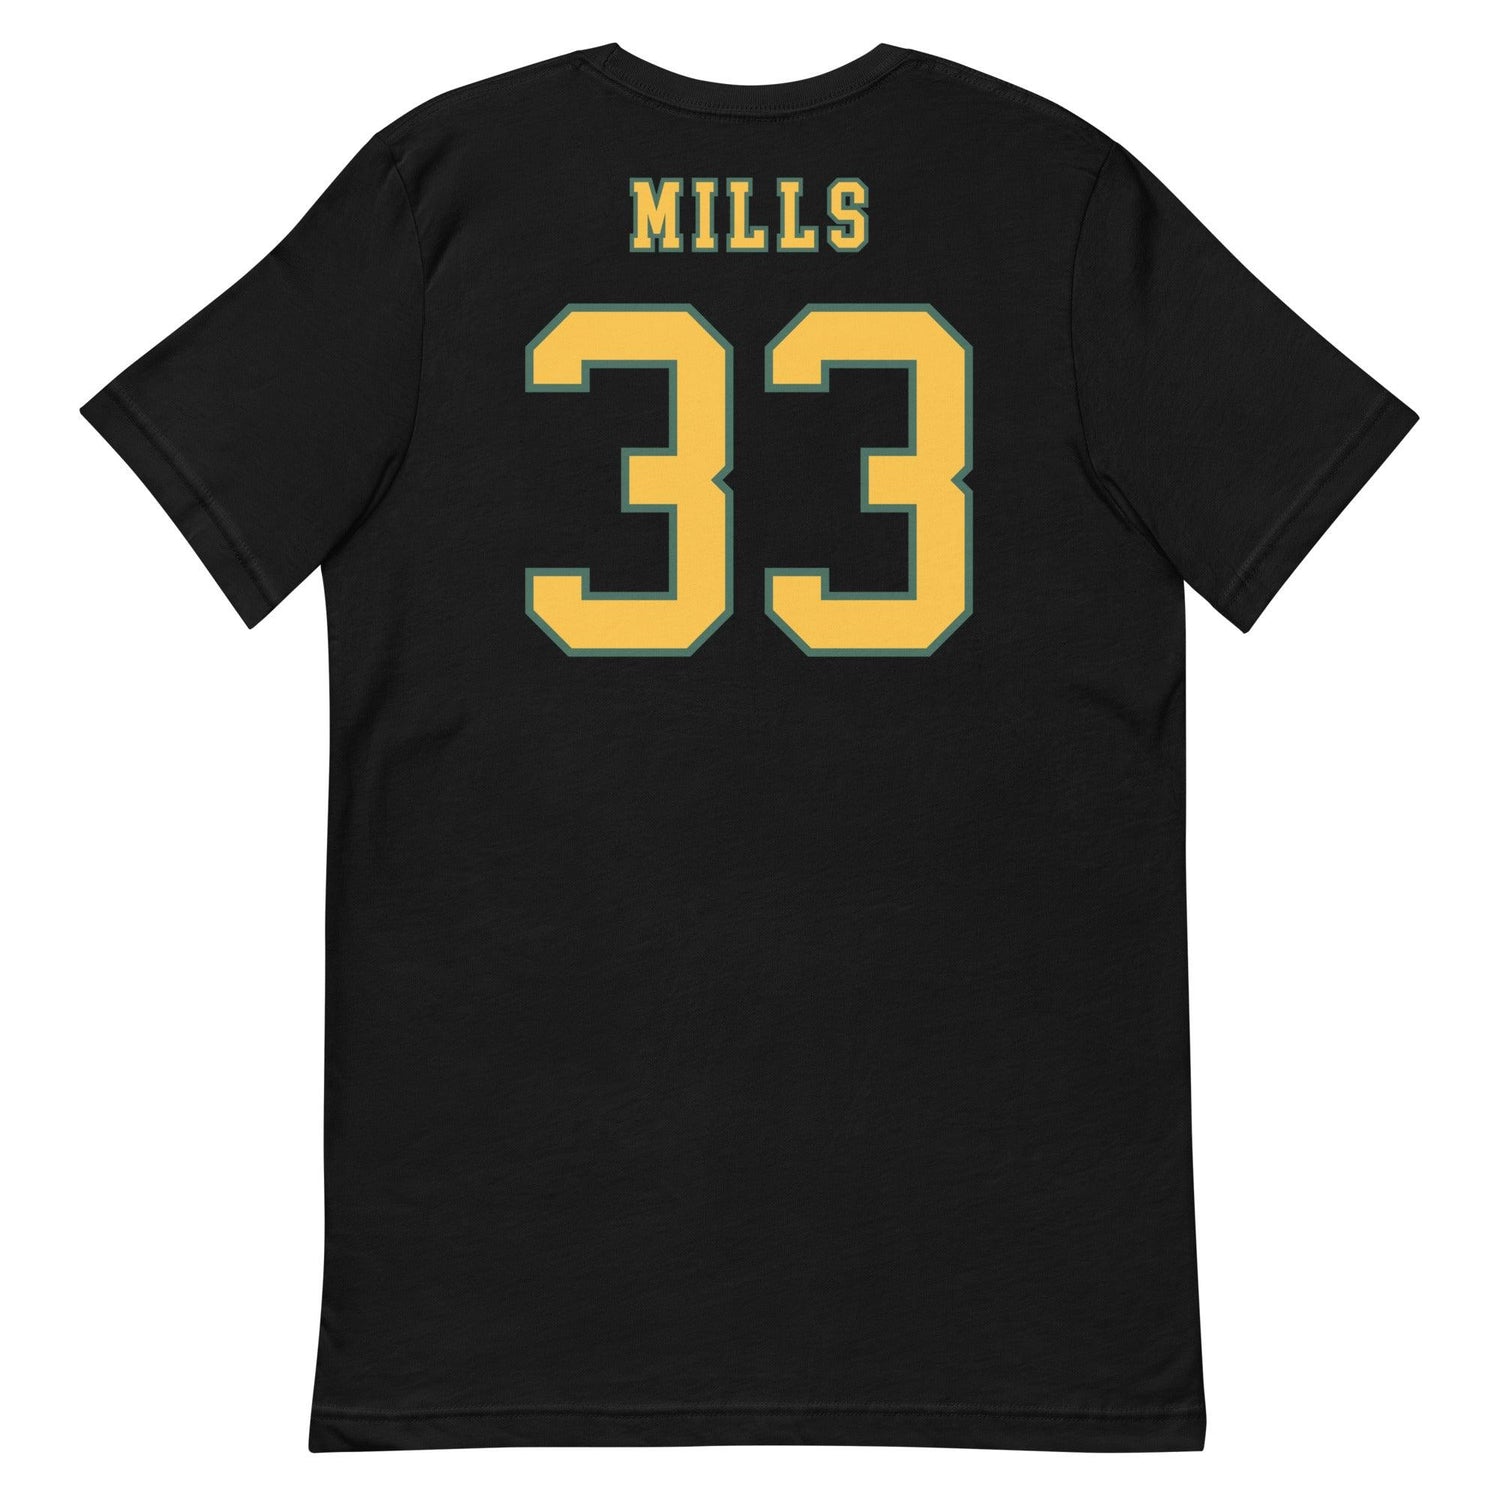 Austin Mills "Jersey" t-shirt - Fan Arch